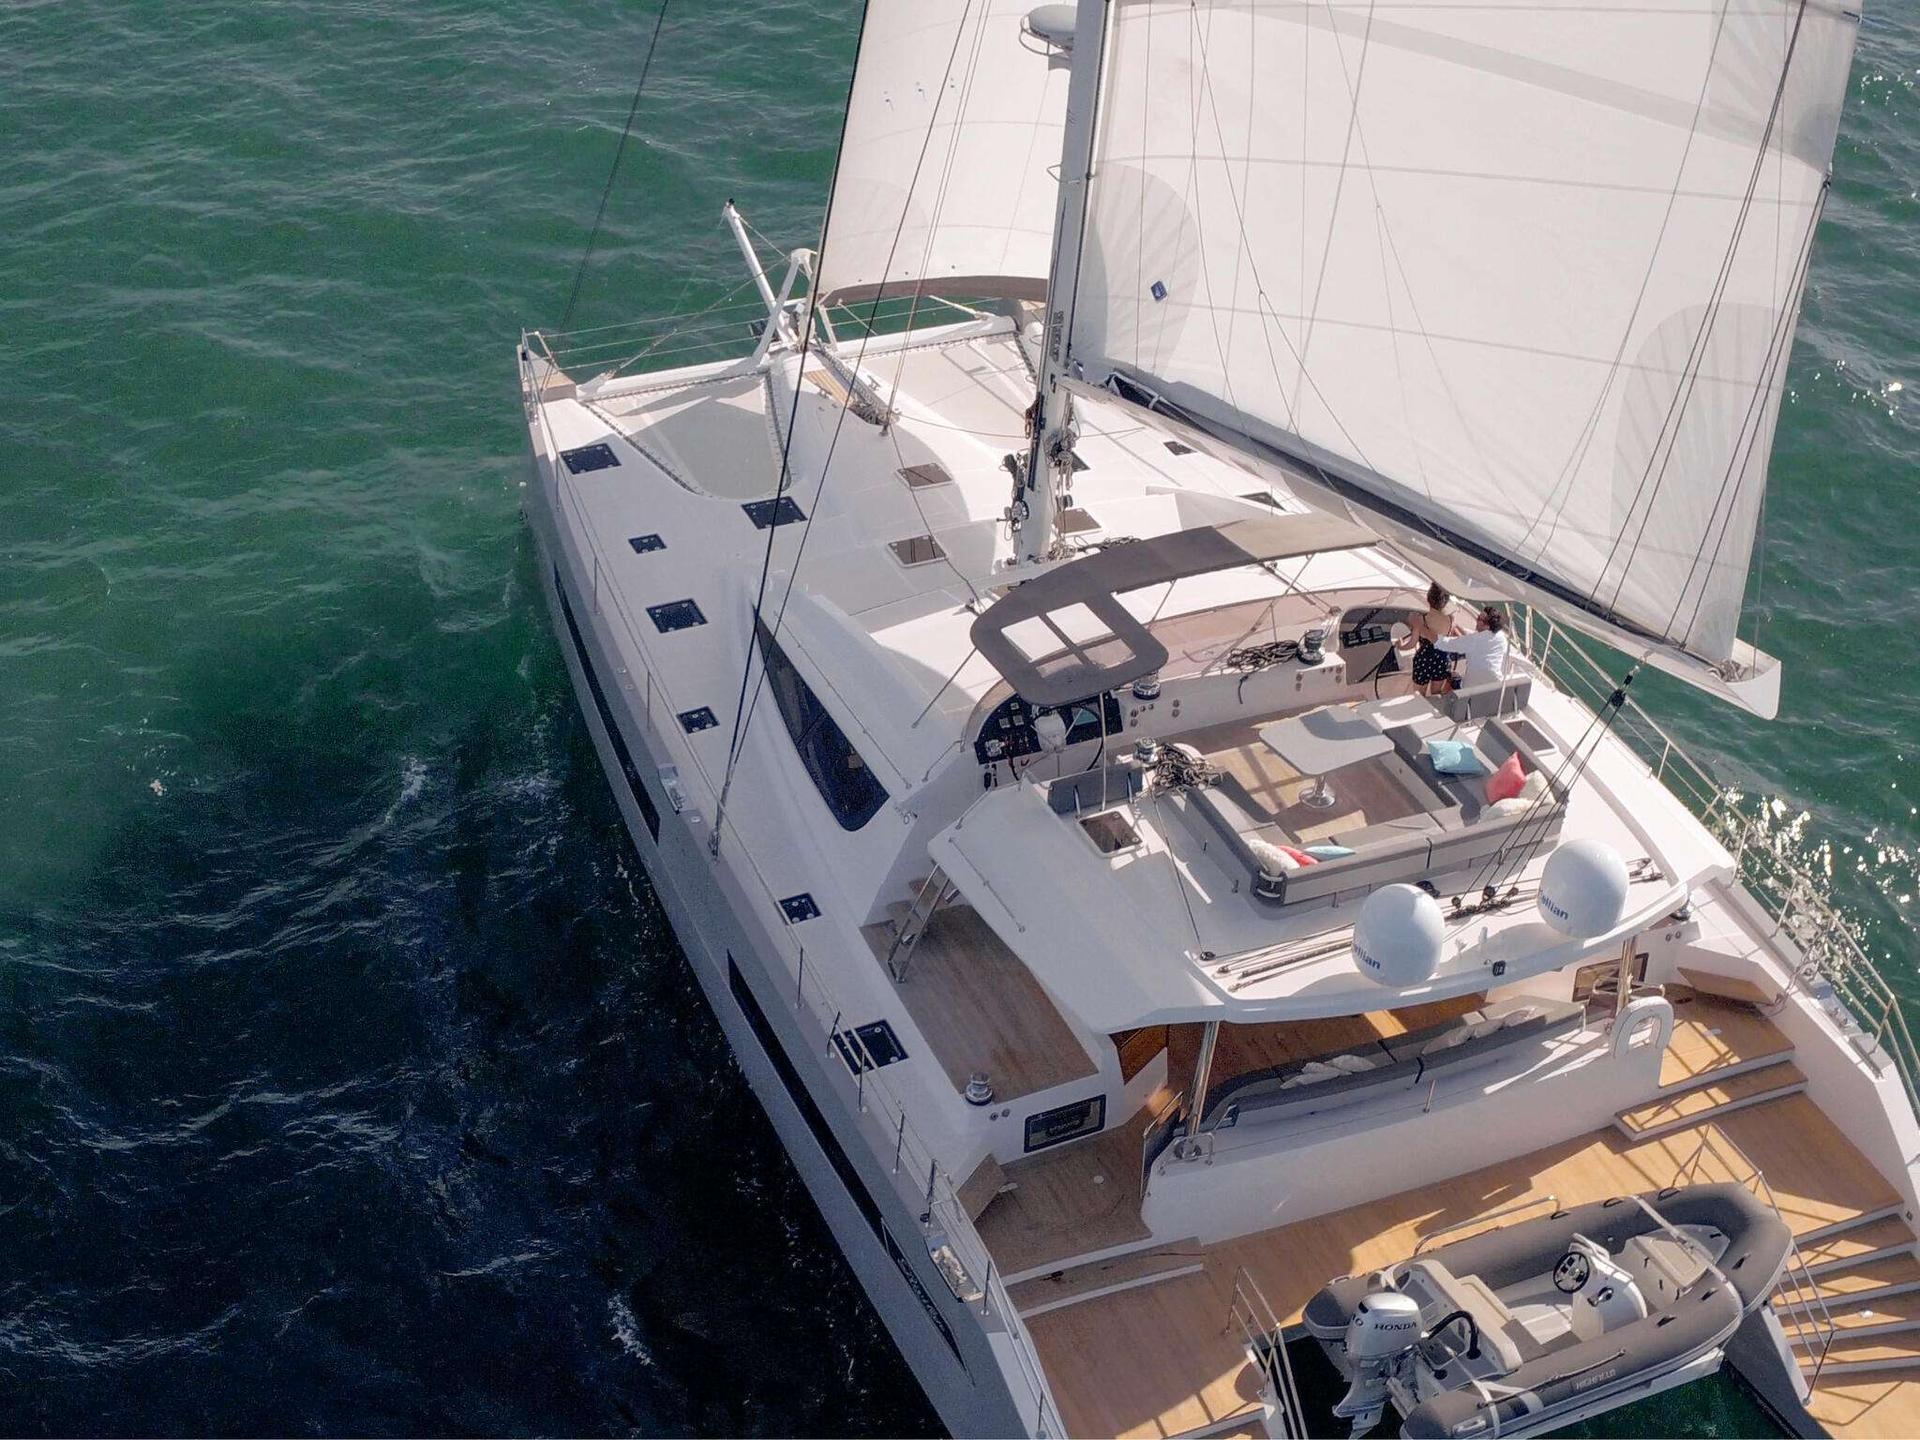 Yacht Charter Caribbean catamaran Segundo Viento